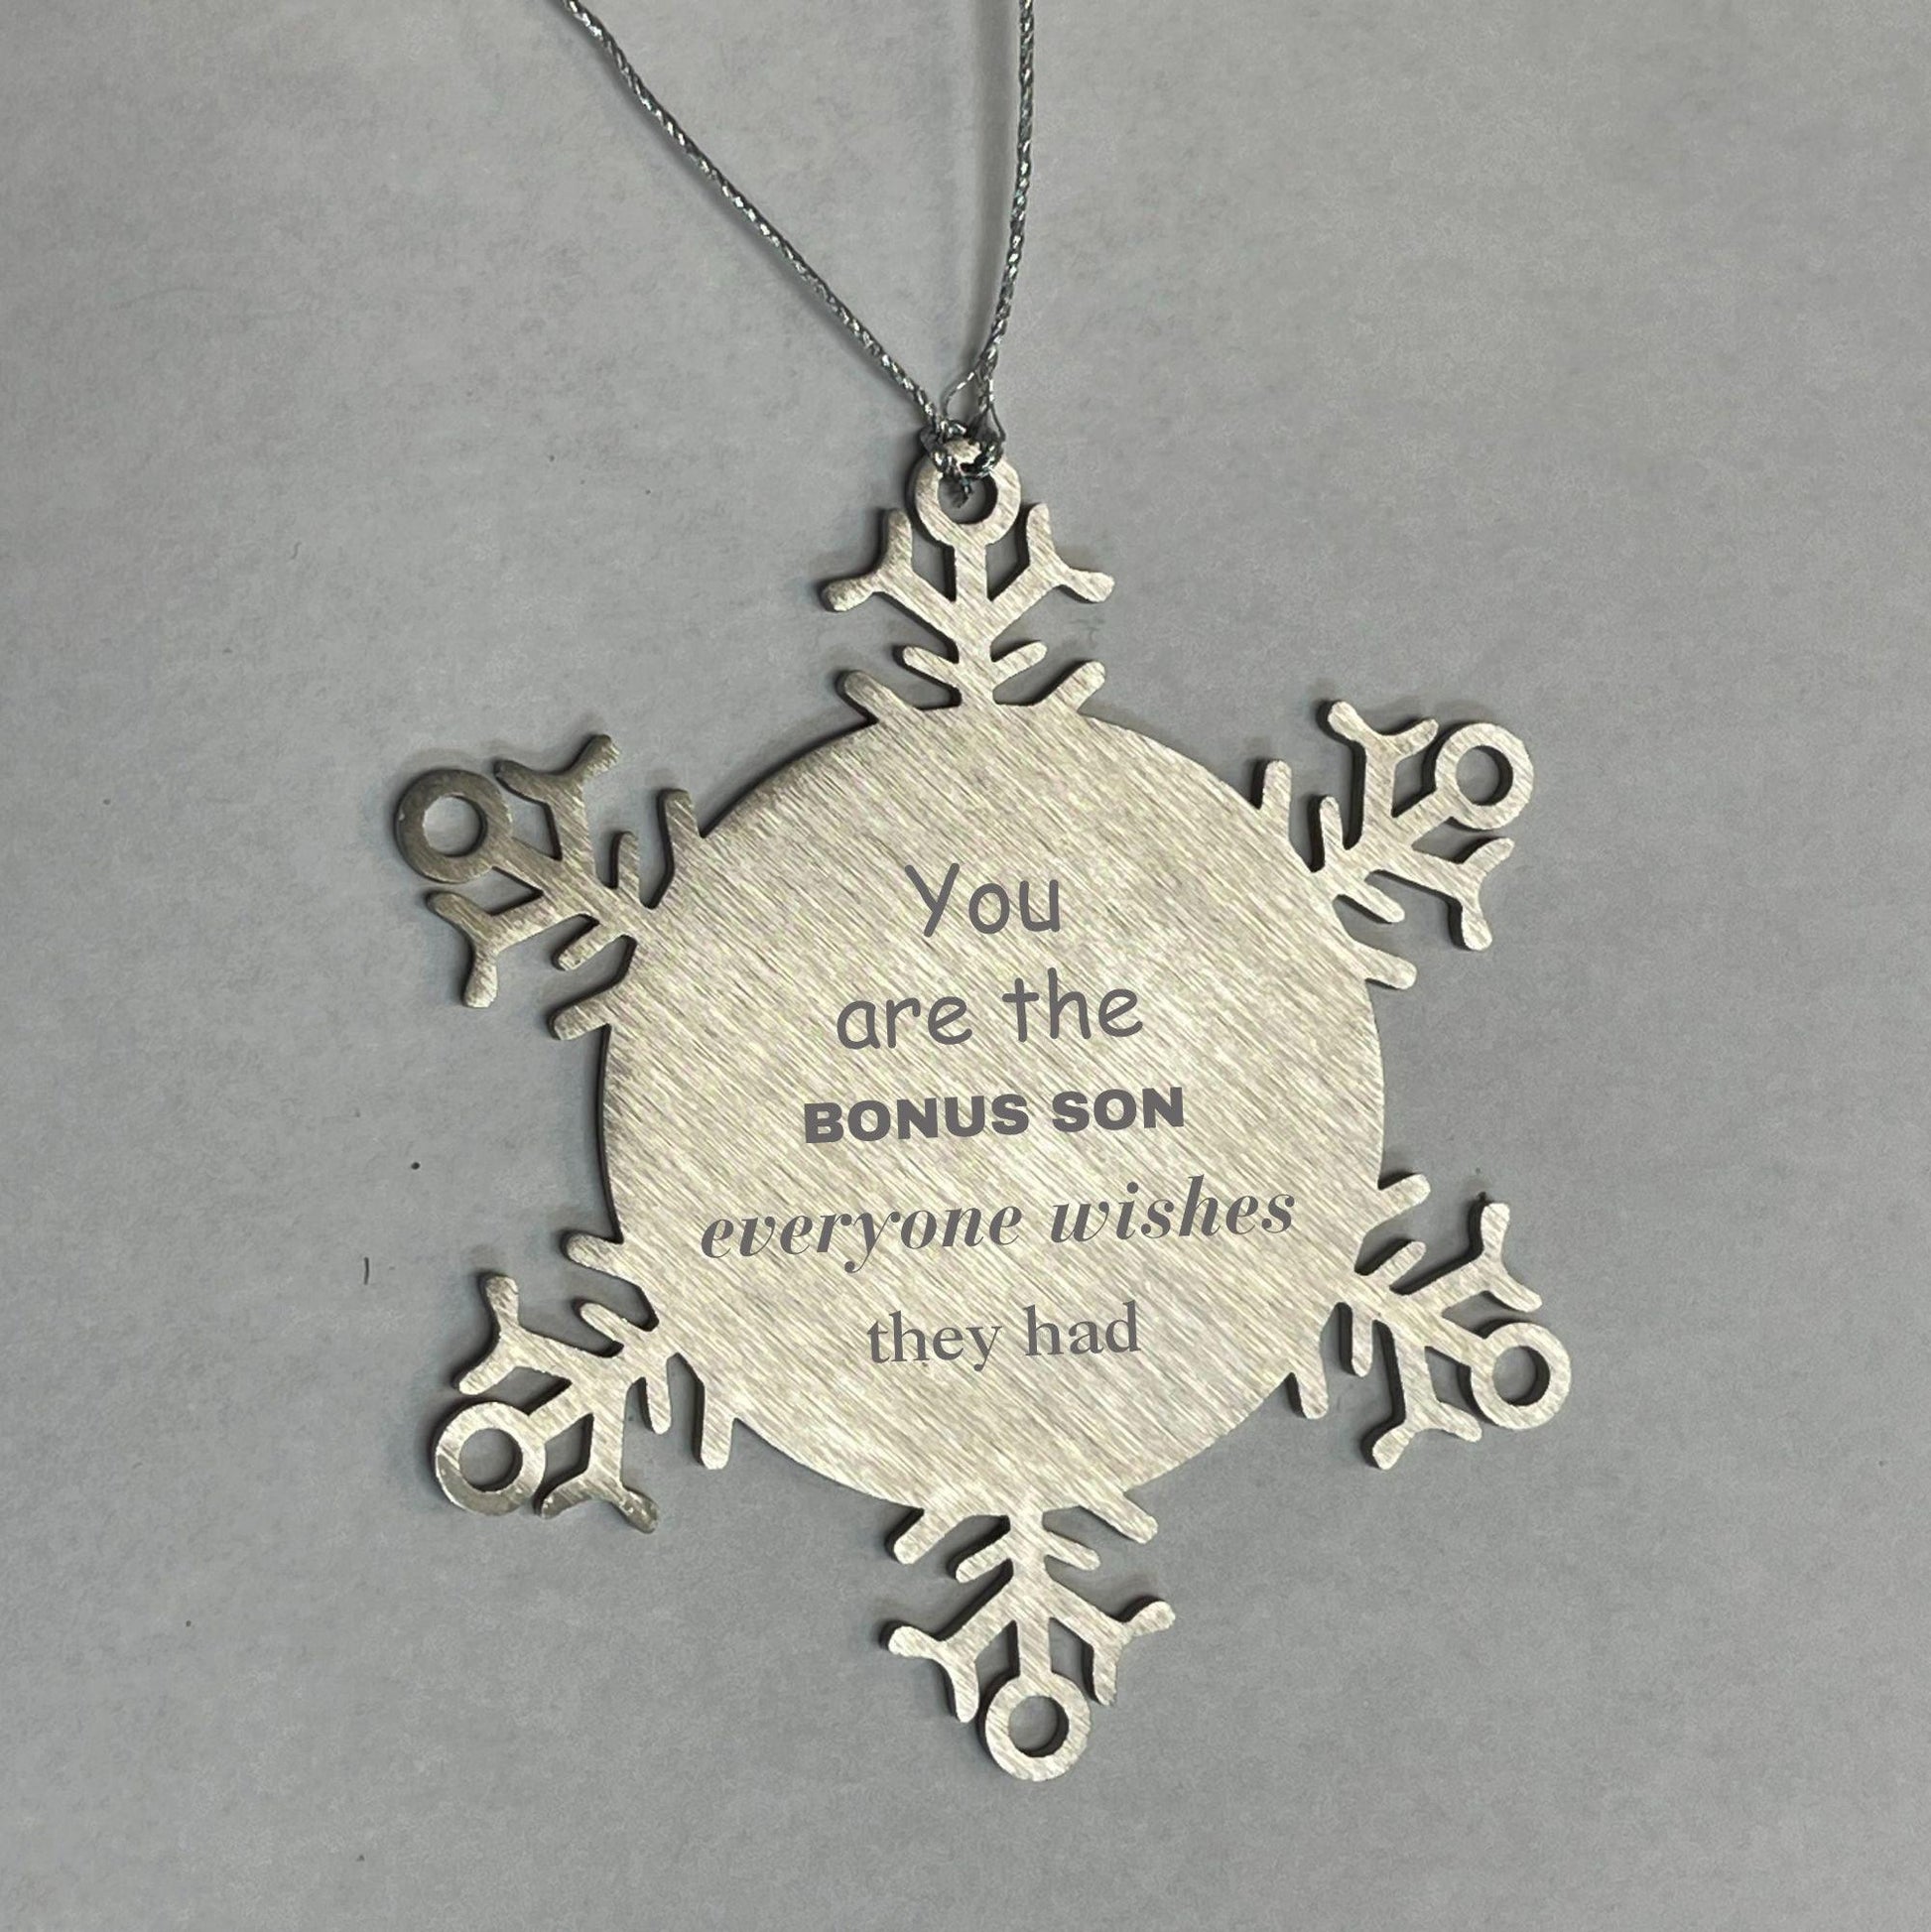 Bonus Son Snowflake Ornament, Everyone wishes they had, Inspirational Ornament For Bonus Son, Bonus Son Gifts, Birthday Christmas Unique Gifts For Bonus Son - Mallard Moon Gift Shop